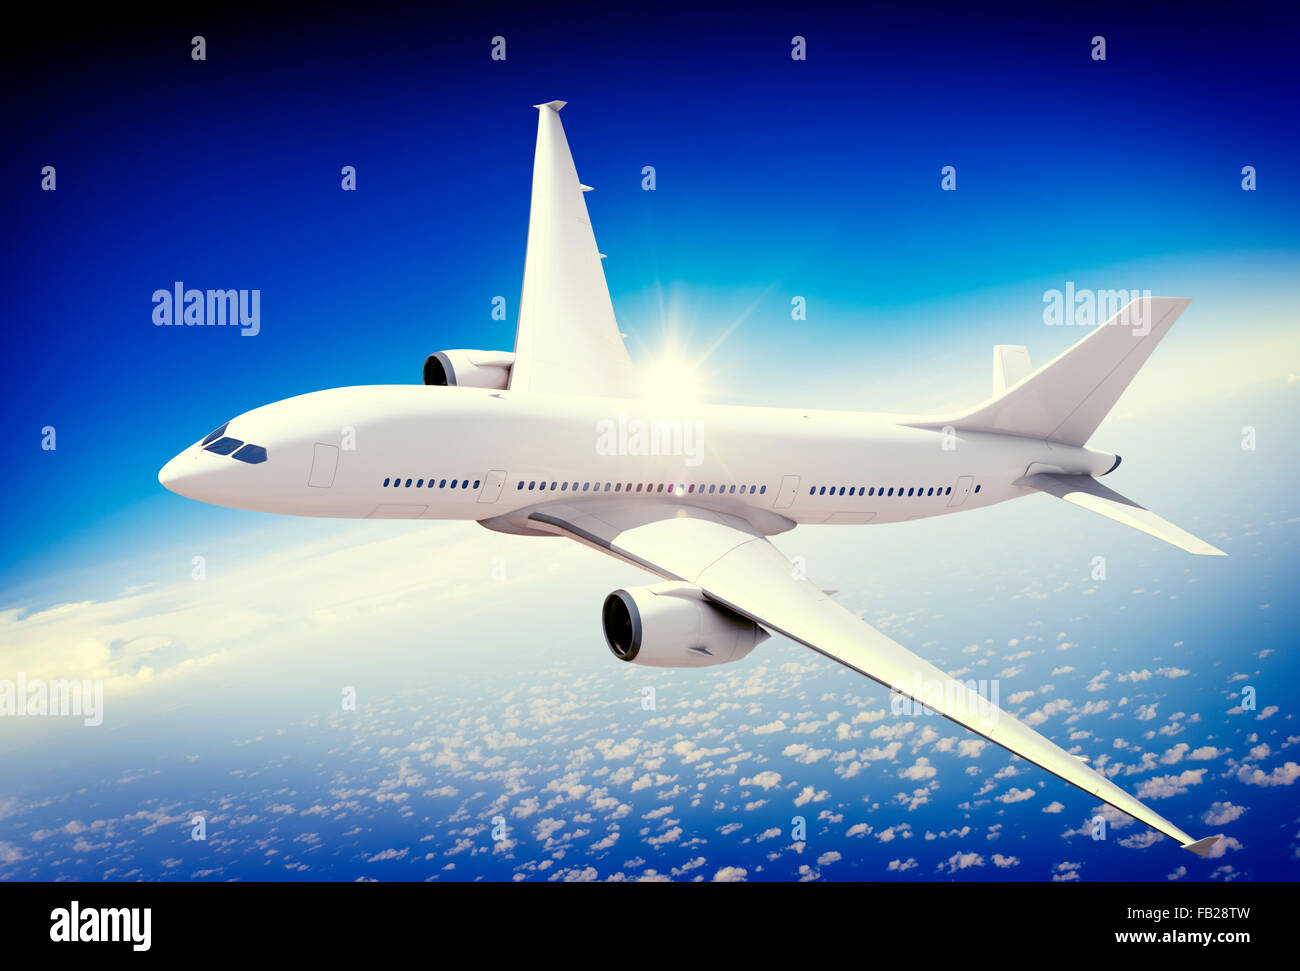 Aircraft Midair Public Transportation Flying concept Stock Photo